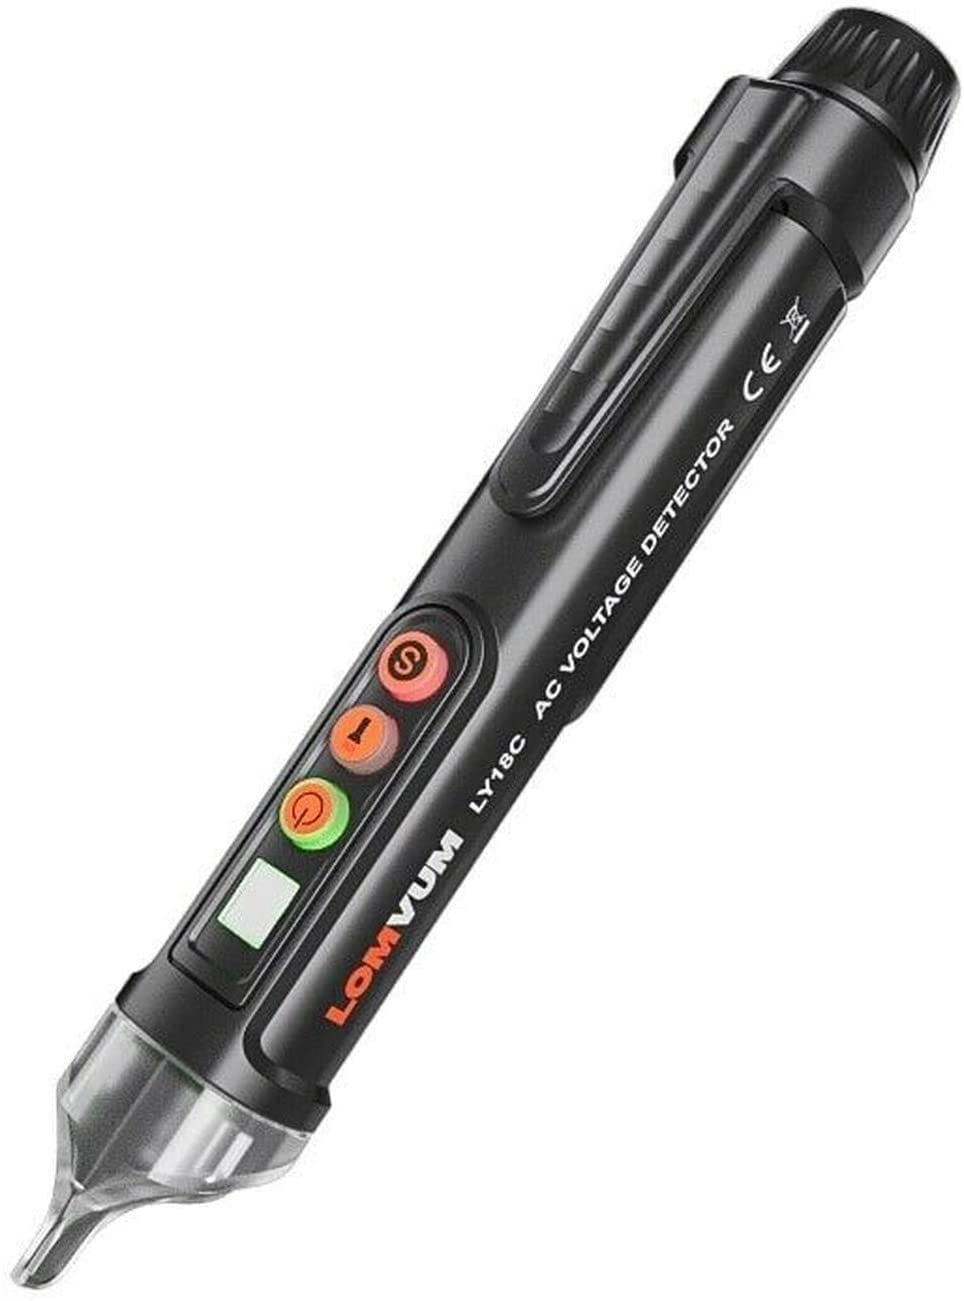 Details about   Voltage Tester Electric Compact Pen Voltage Battery Test Pencil 